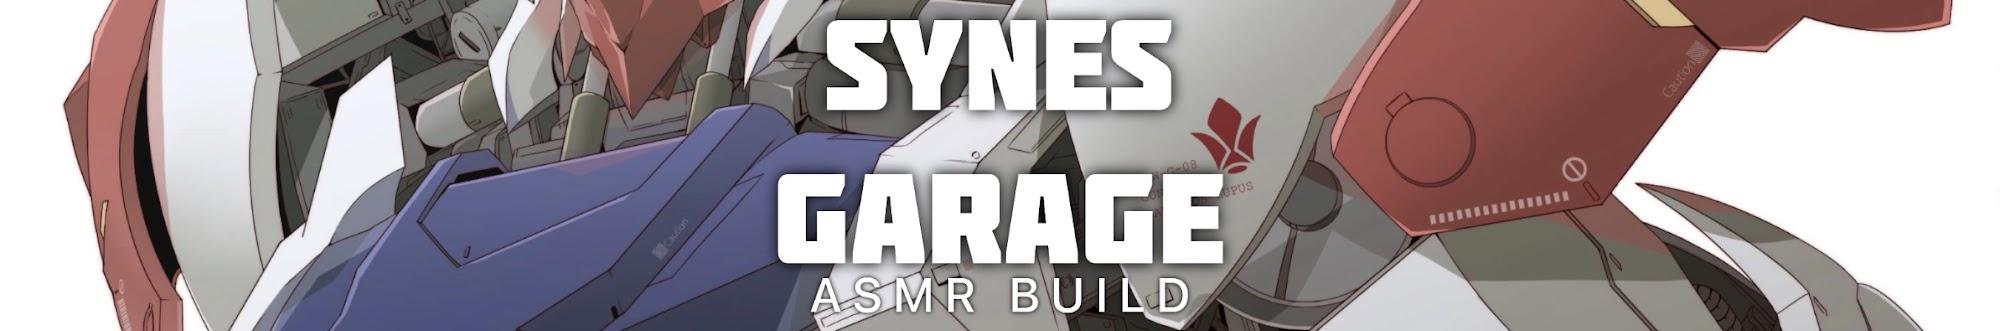 Synes Garage